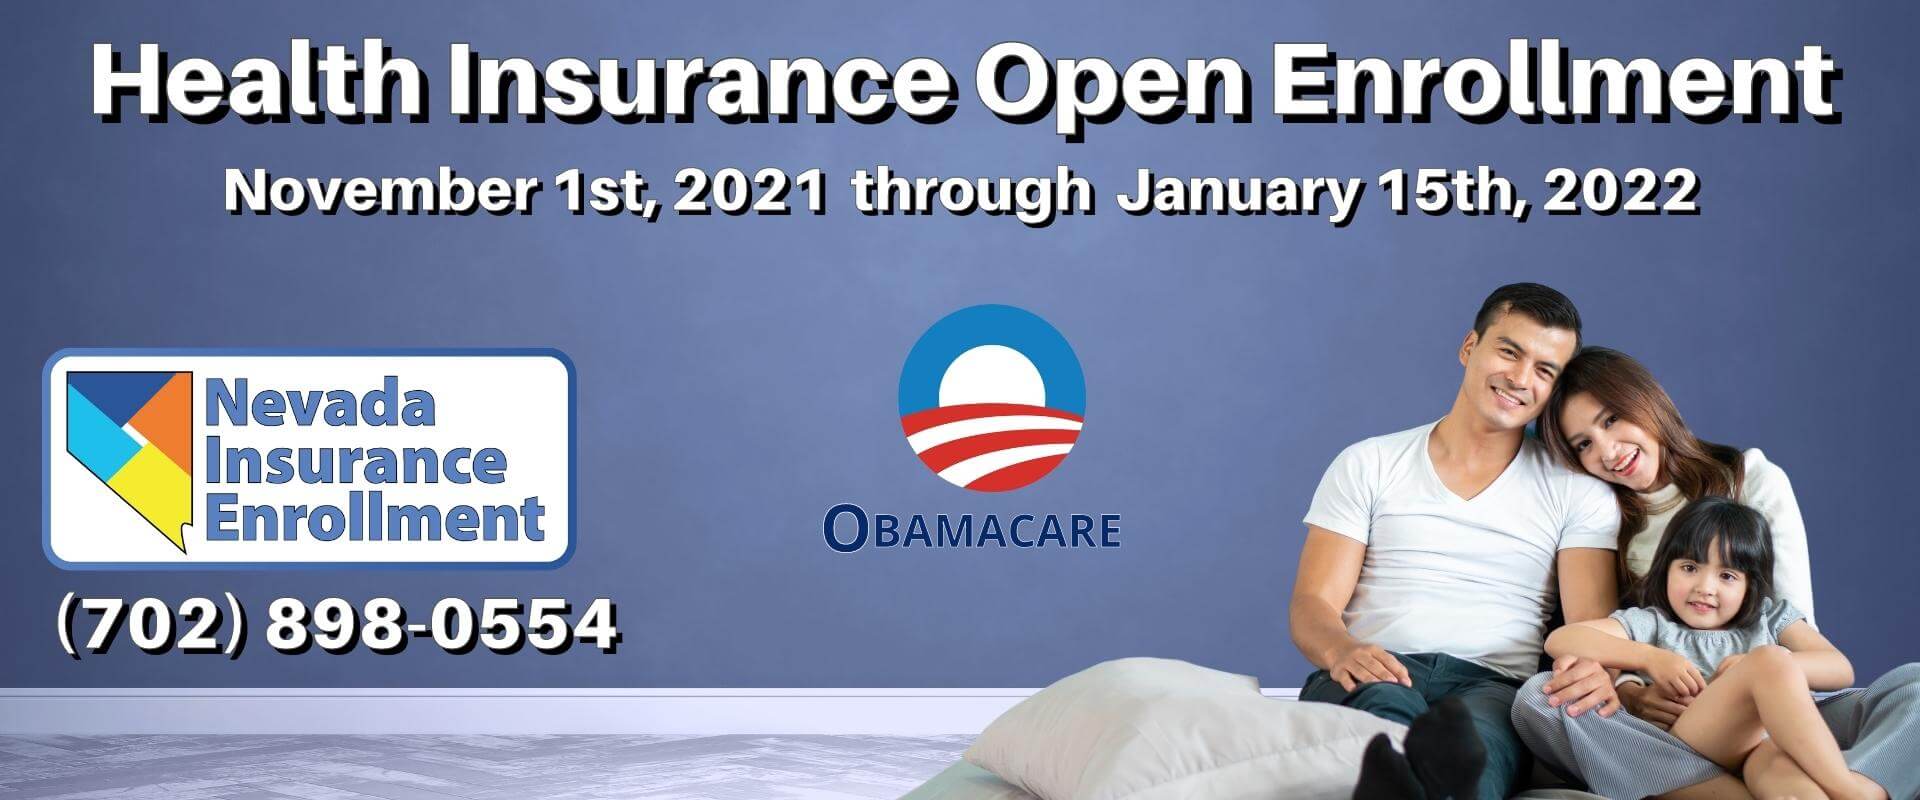 Health Insurance Open Enrollment - November 1st 2021 through January 15th 2022